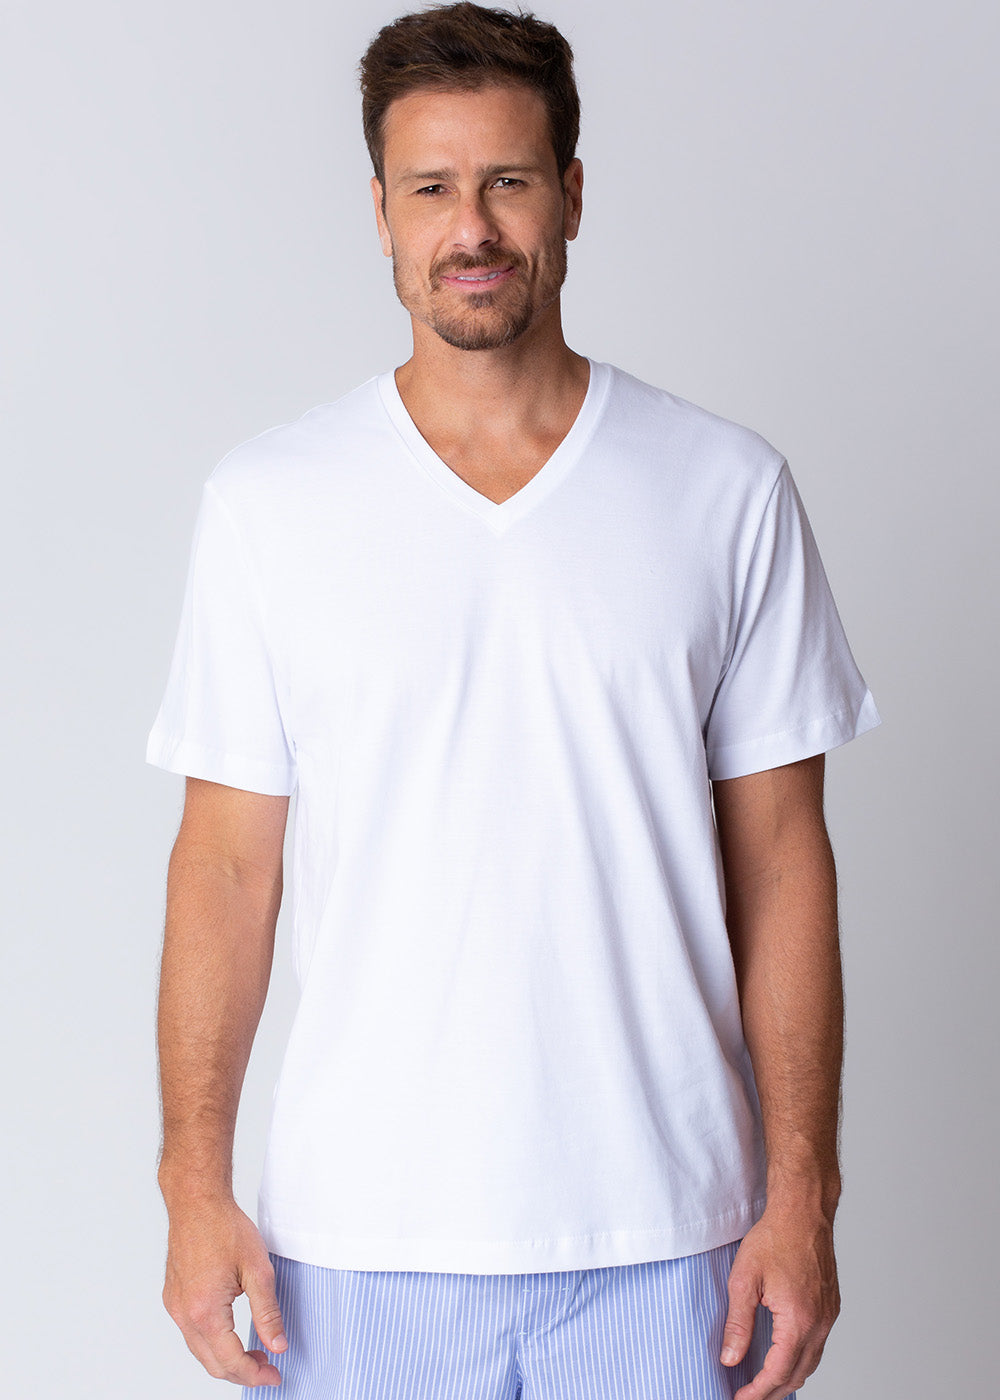 Camiseta Gola V Branca